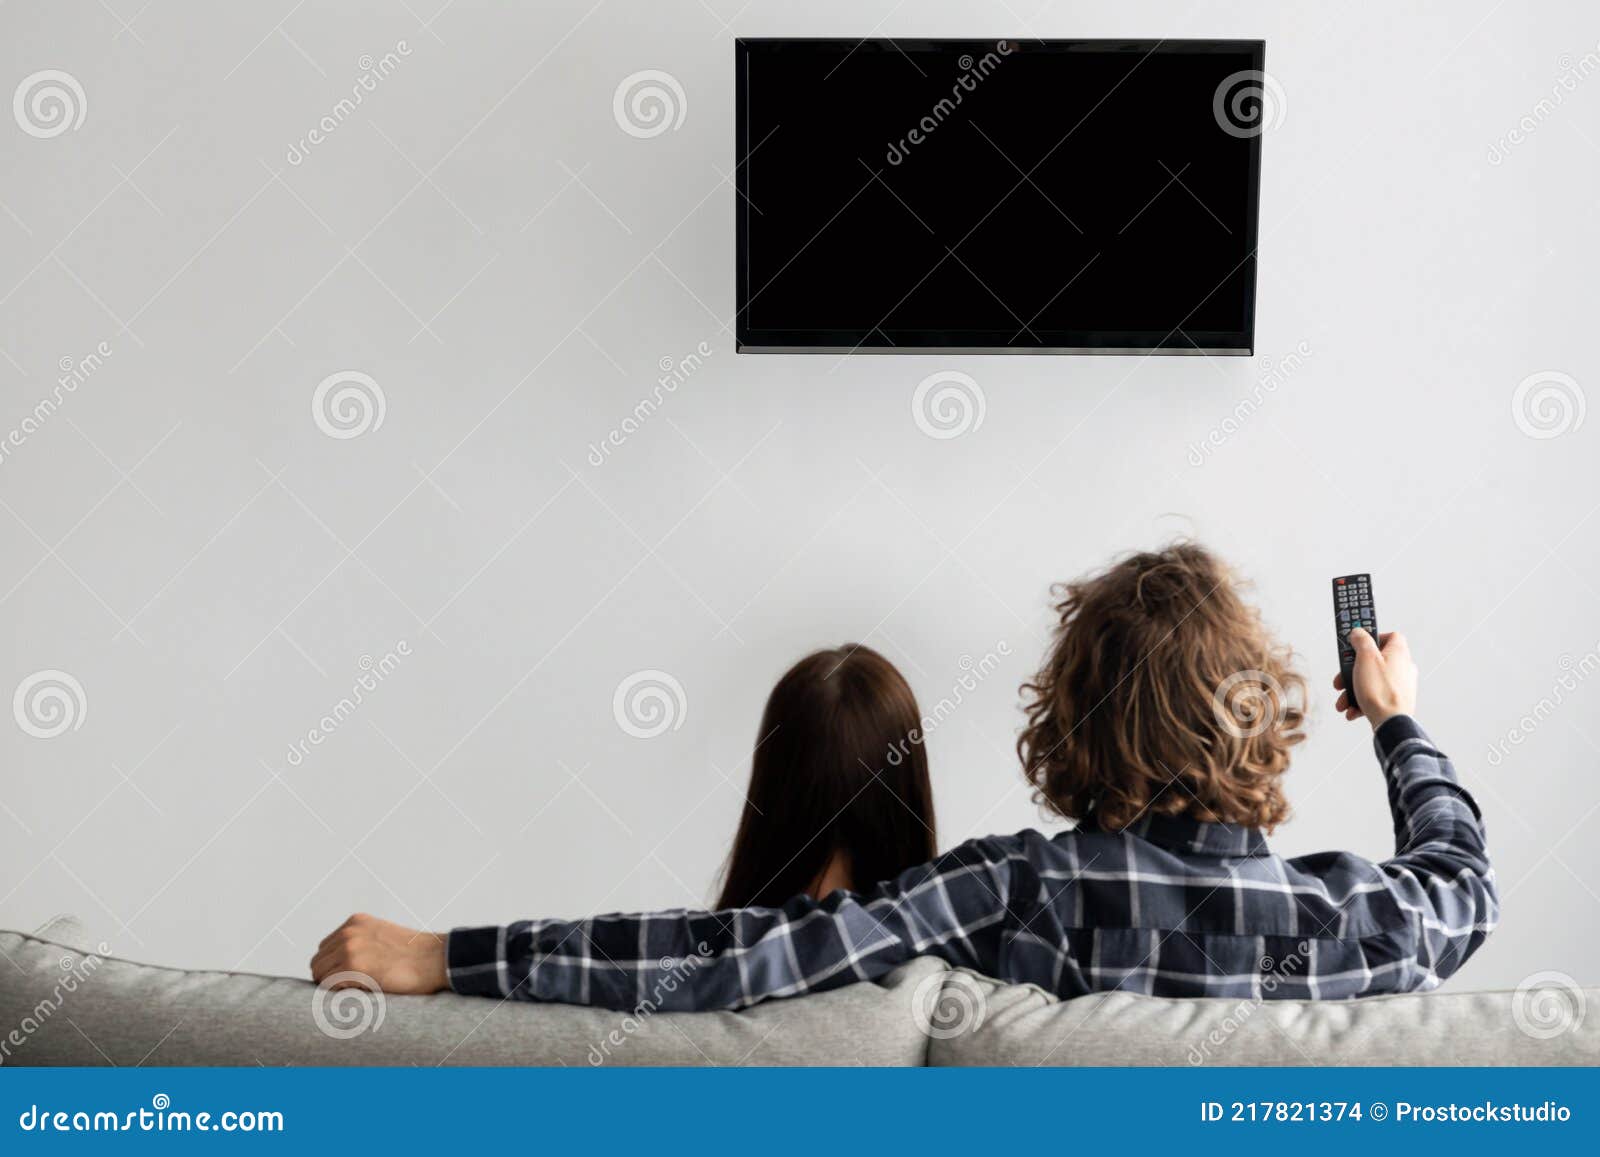 Телевизор сиди дома. Женщина сидит у телевизора грустная. Человек сидит на телевизоре. Сидеть за телевизором не более 3 часо.